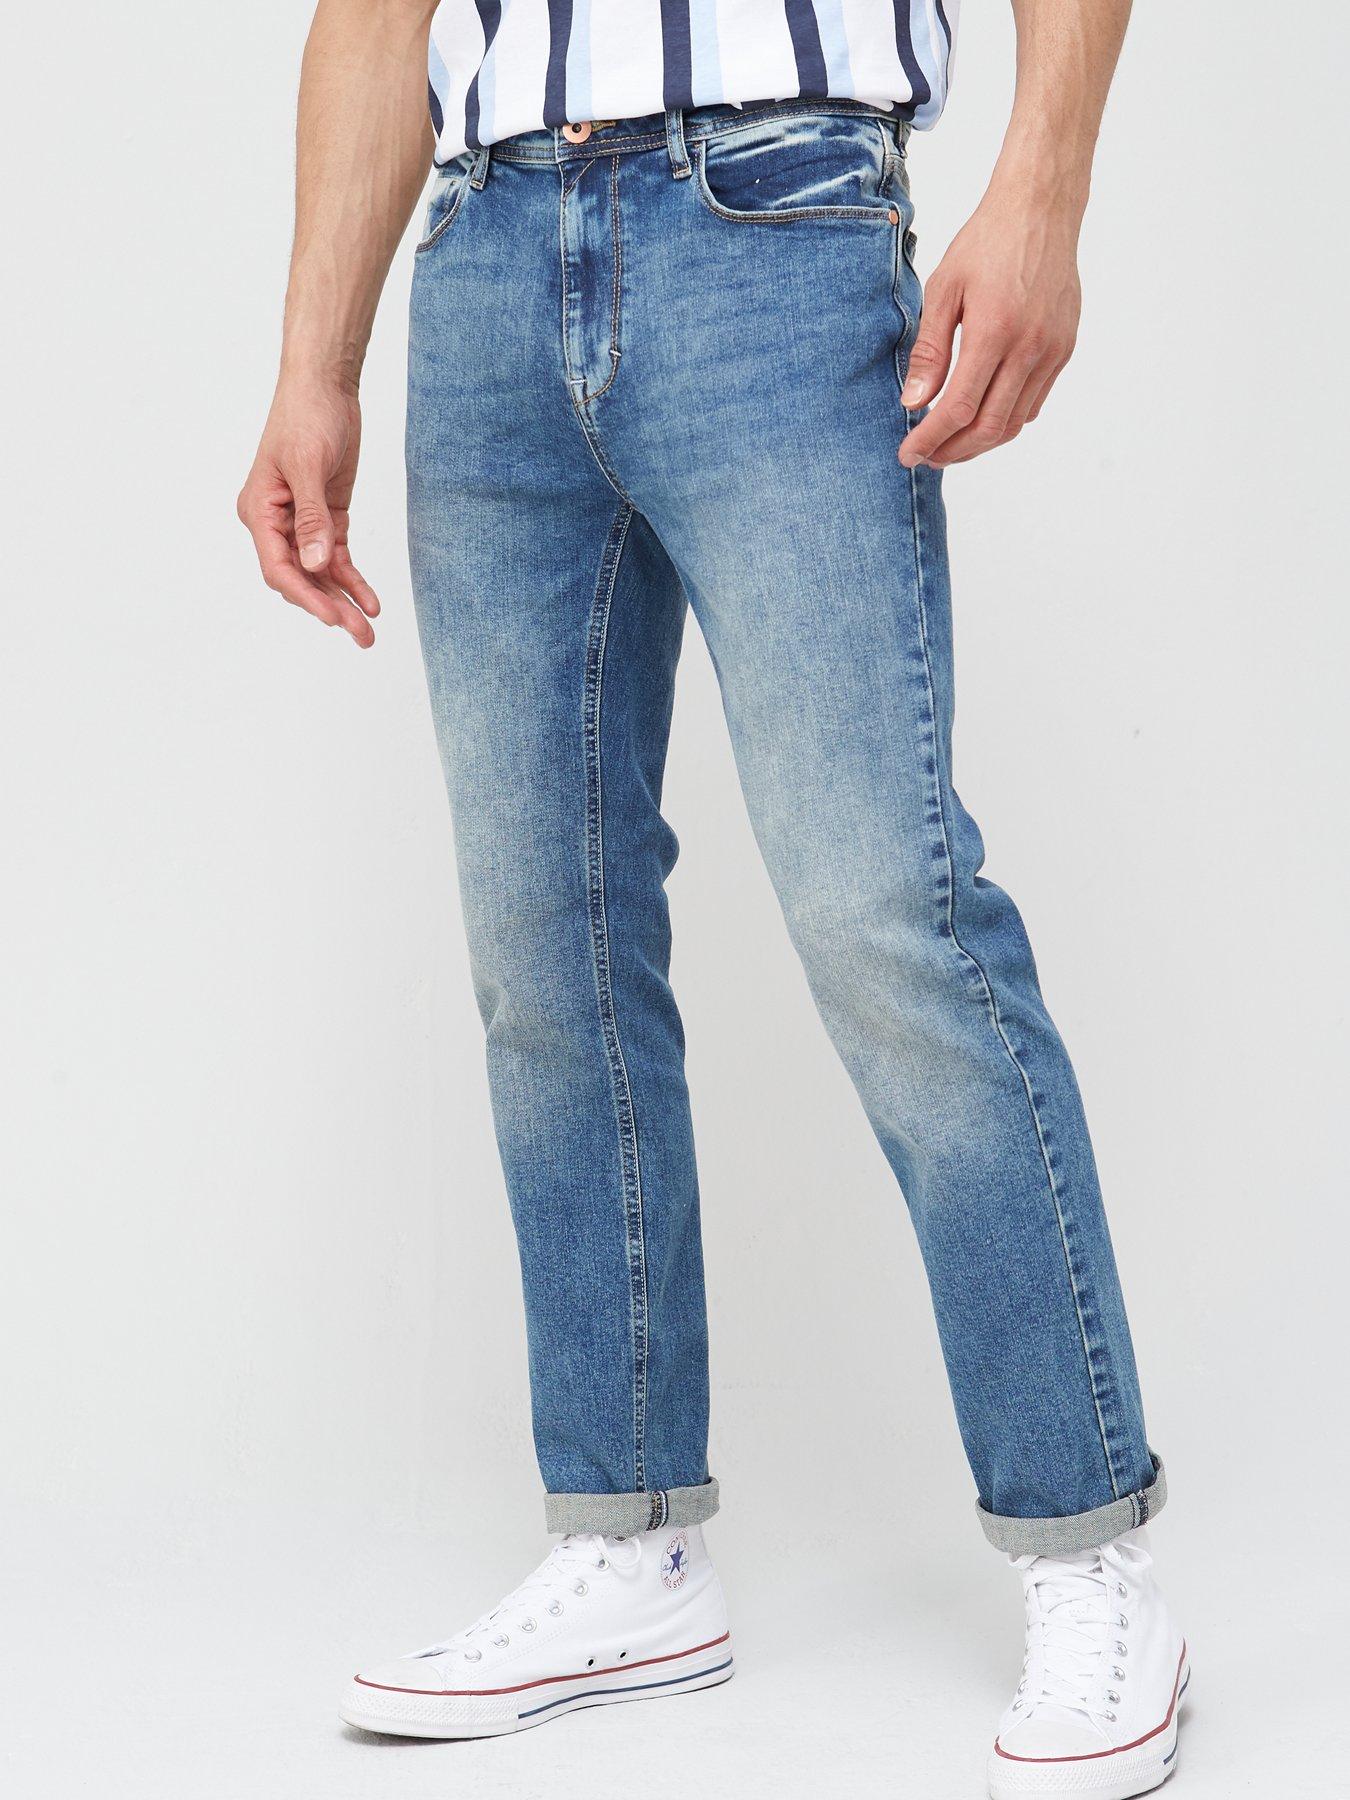 littlewoods mens jeans